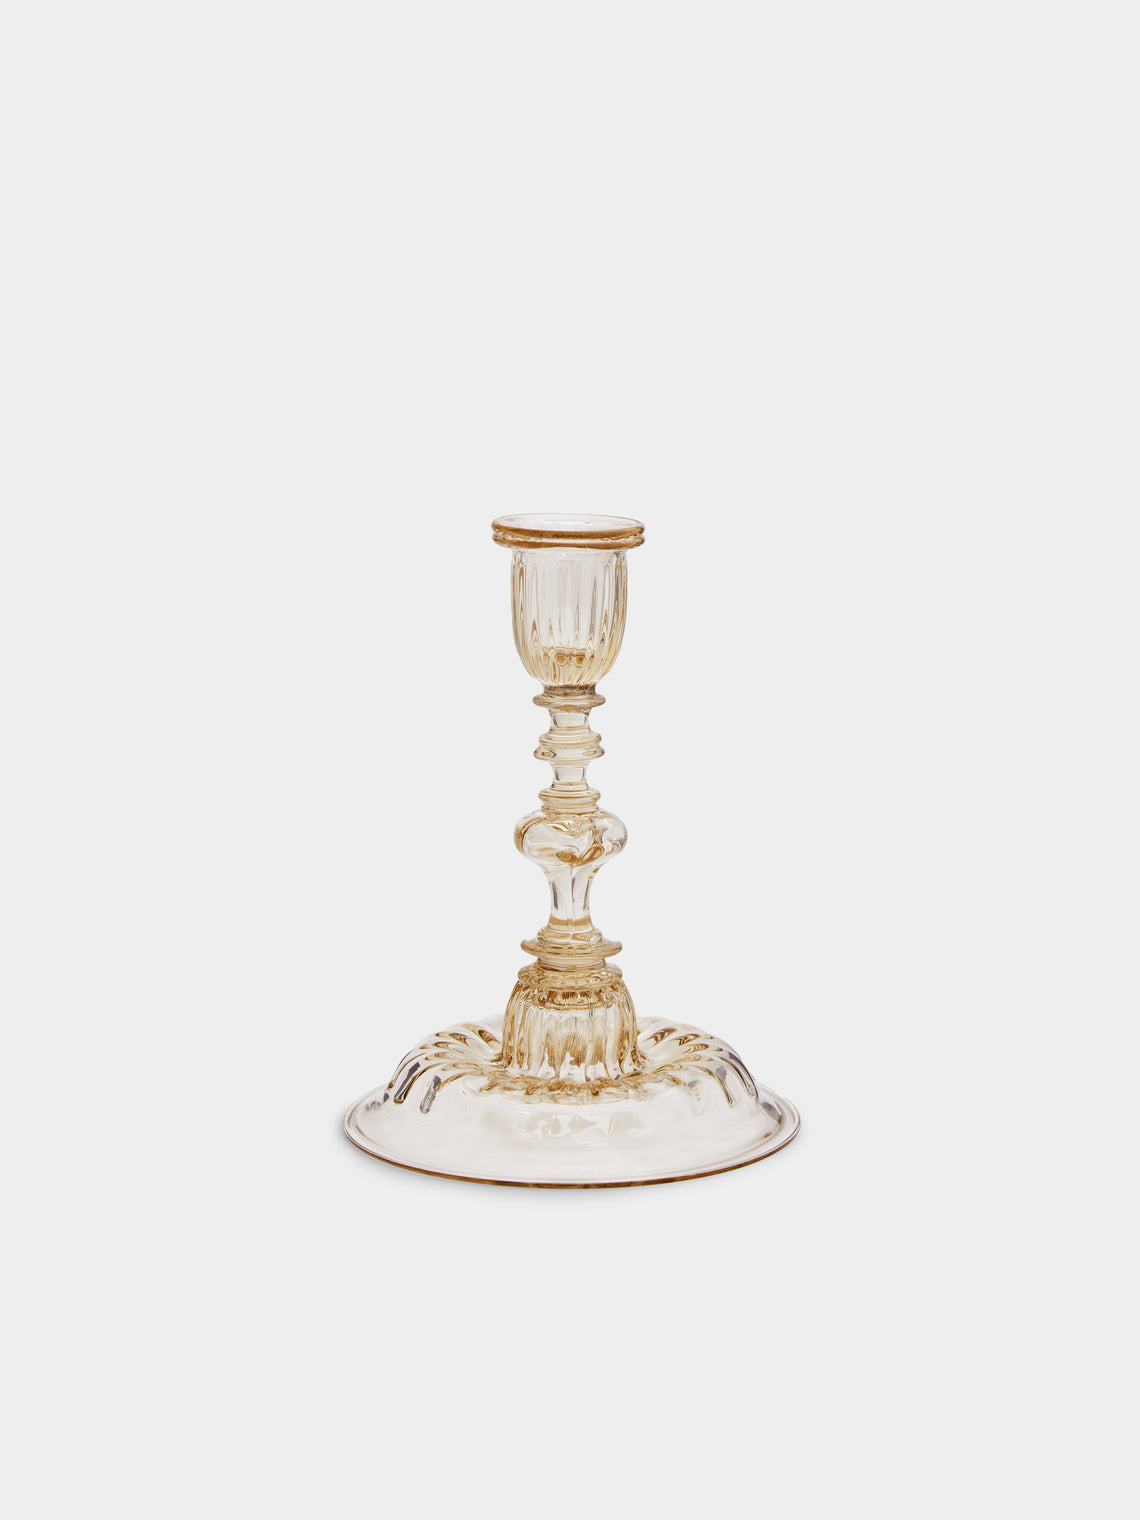 Bollenglass - Hand-Blown Glass Small Candlestick -  - ABASK - 